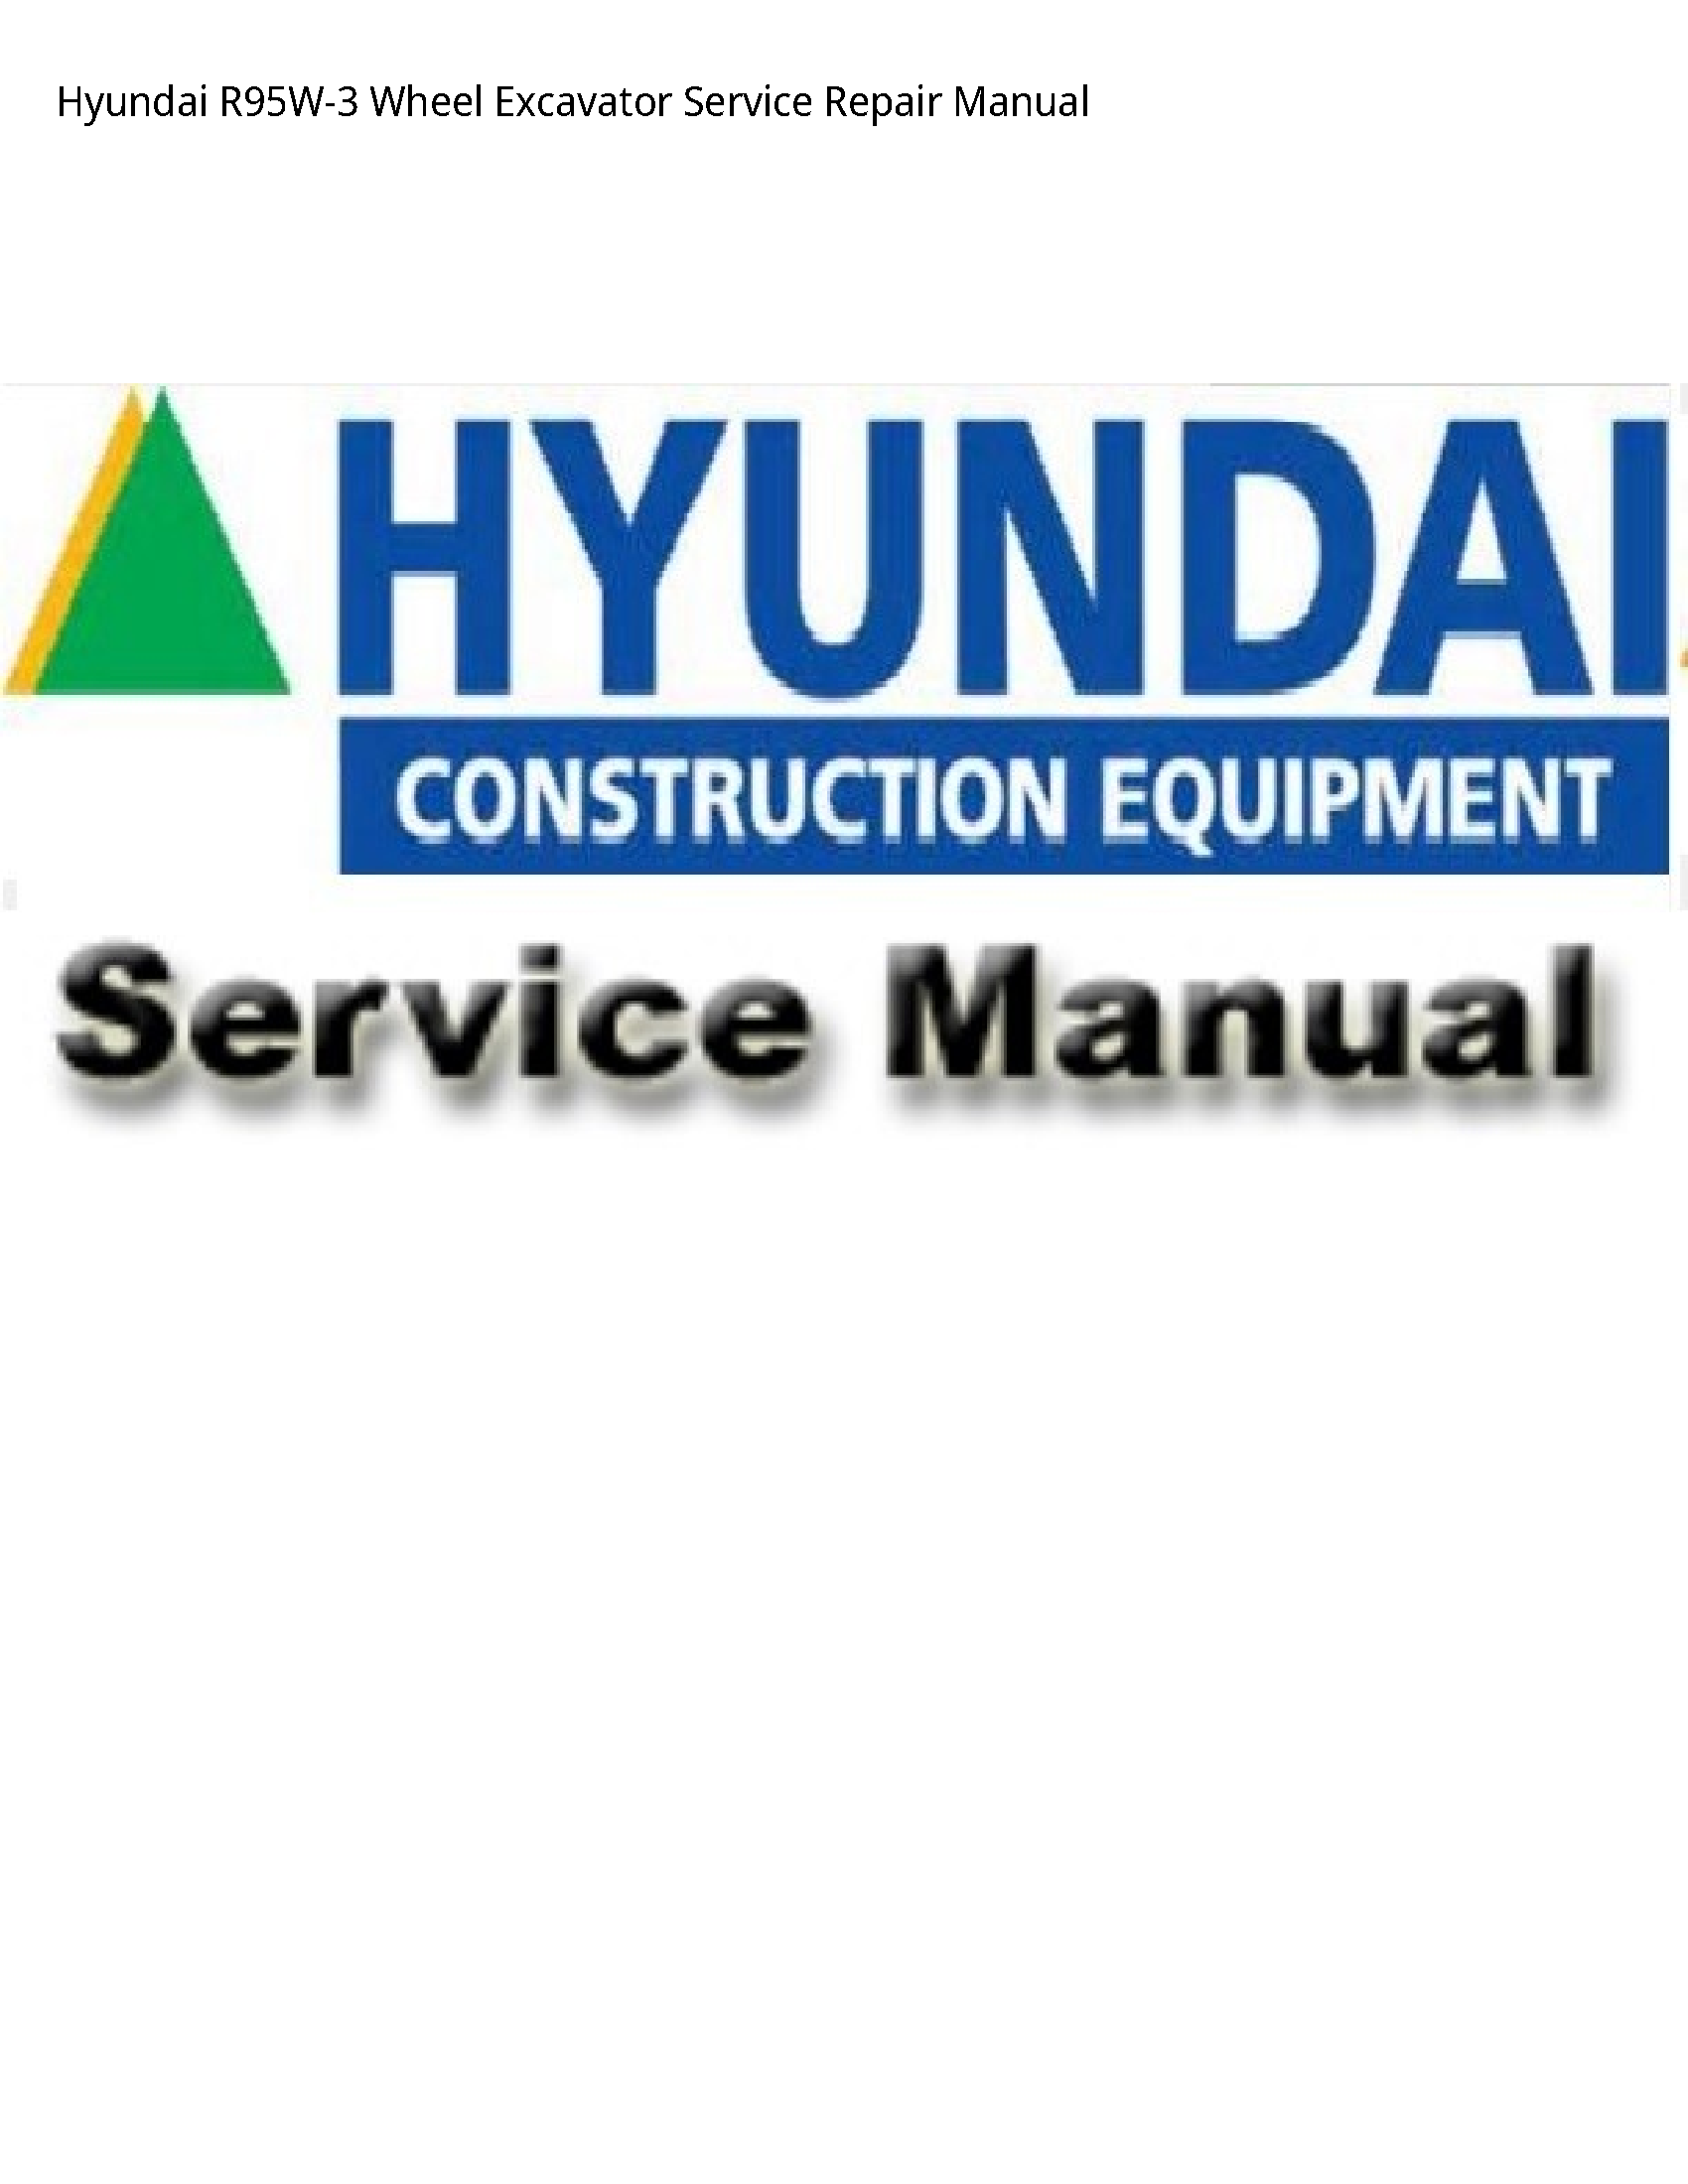 Hyundai R95W-3 Wheel Excavator manual